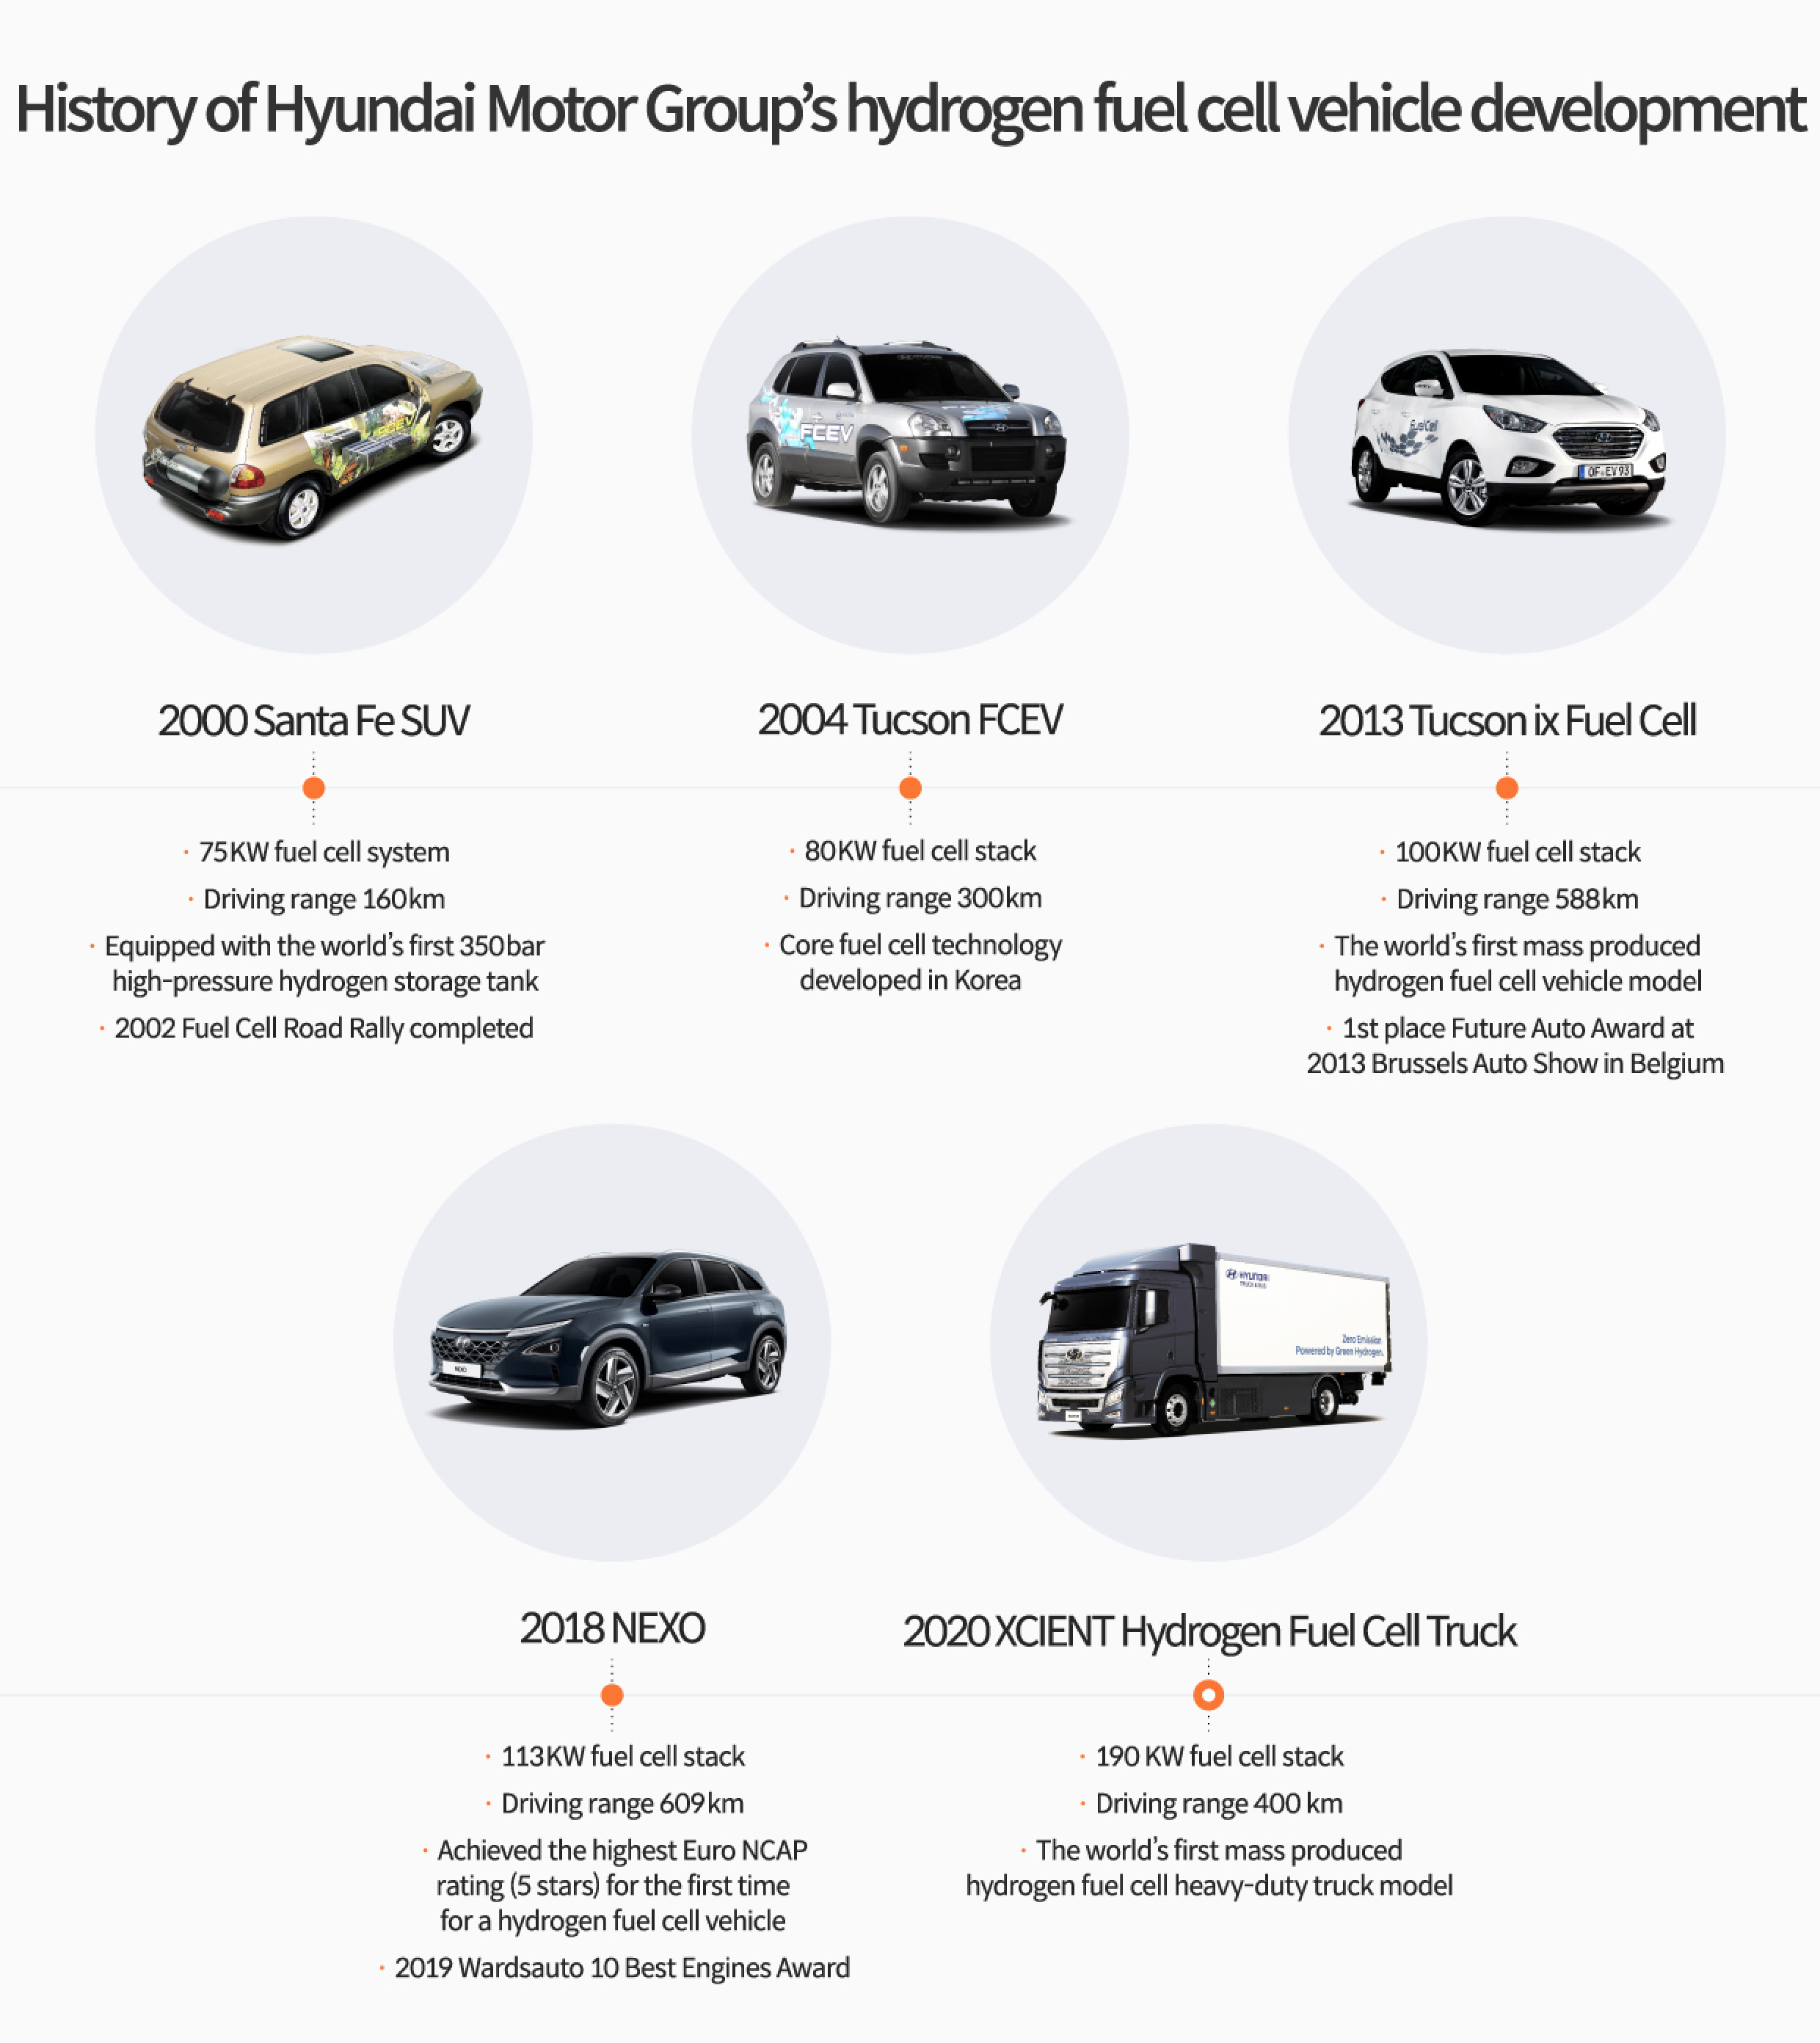 History of Hyundai Motor Group's hydrogen electric vehicle development